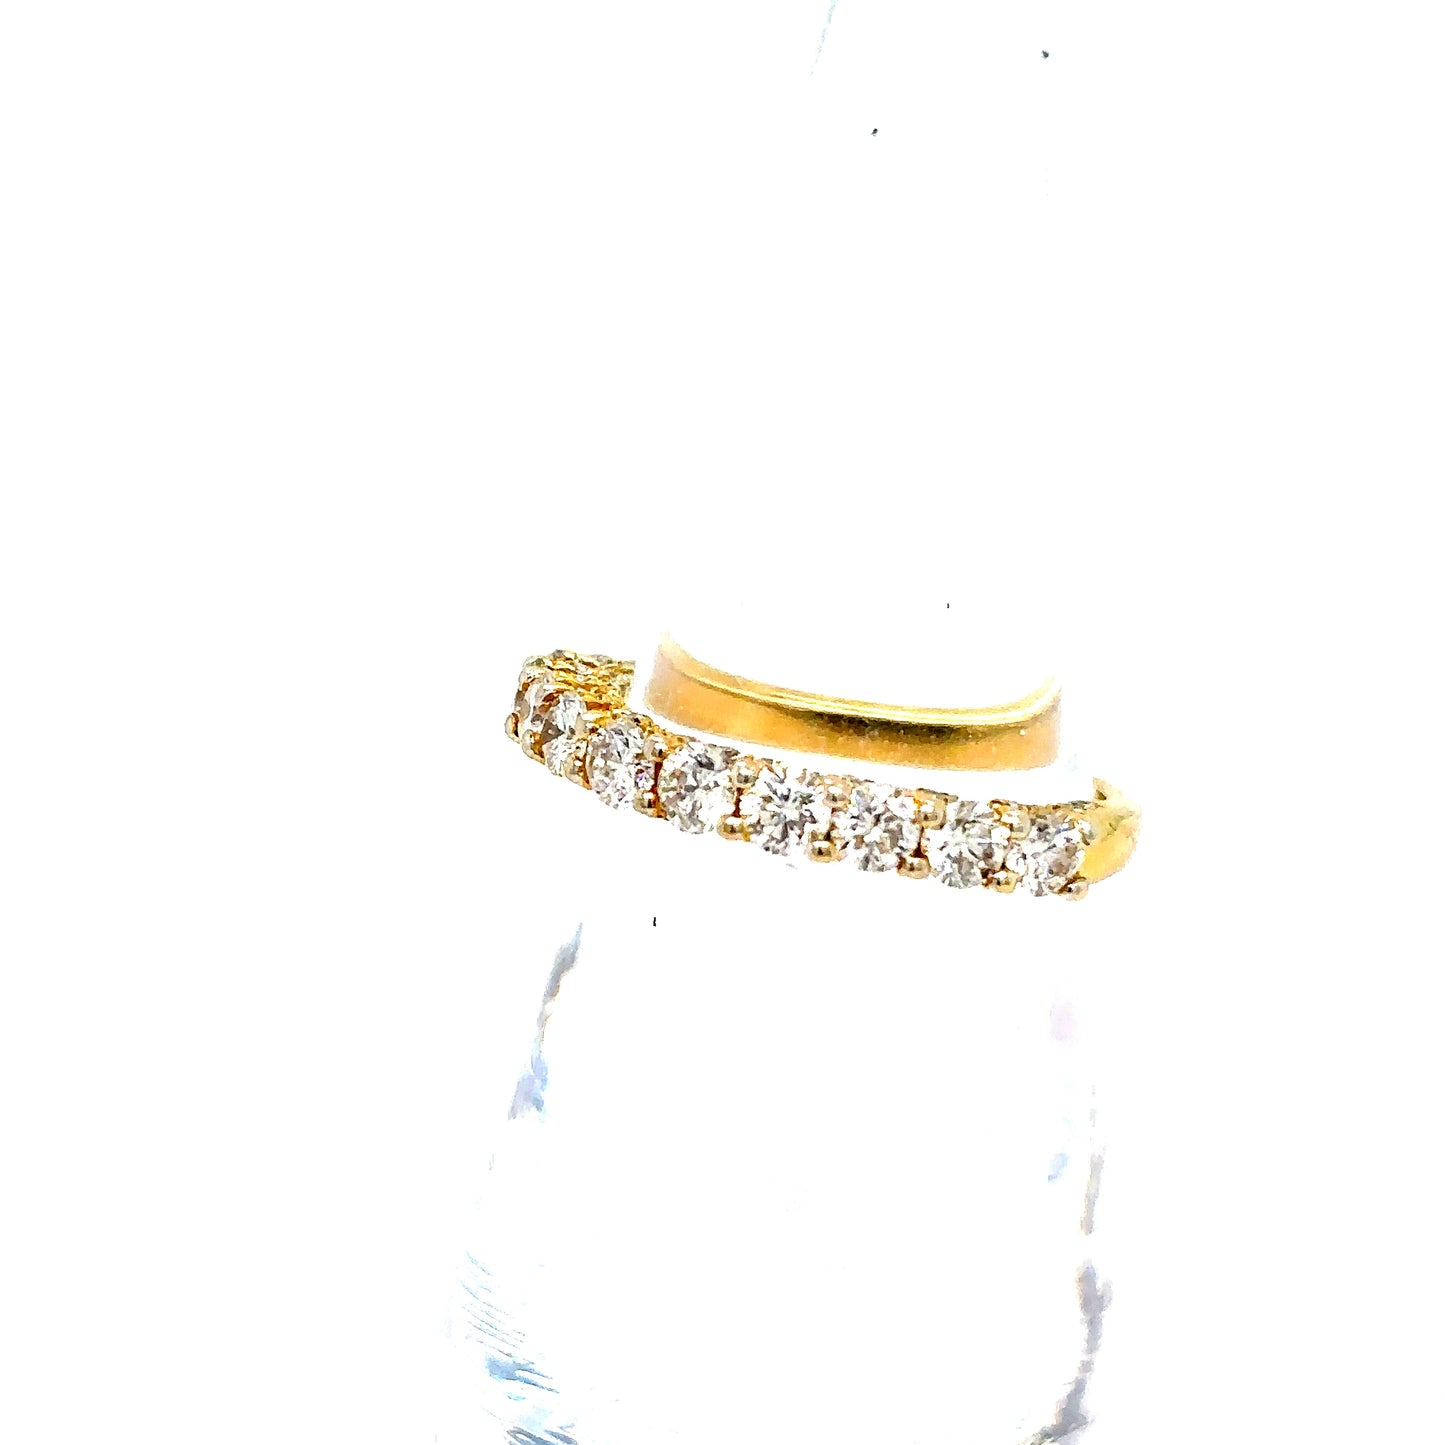 10k Yellow Gold VS Diamond Ring